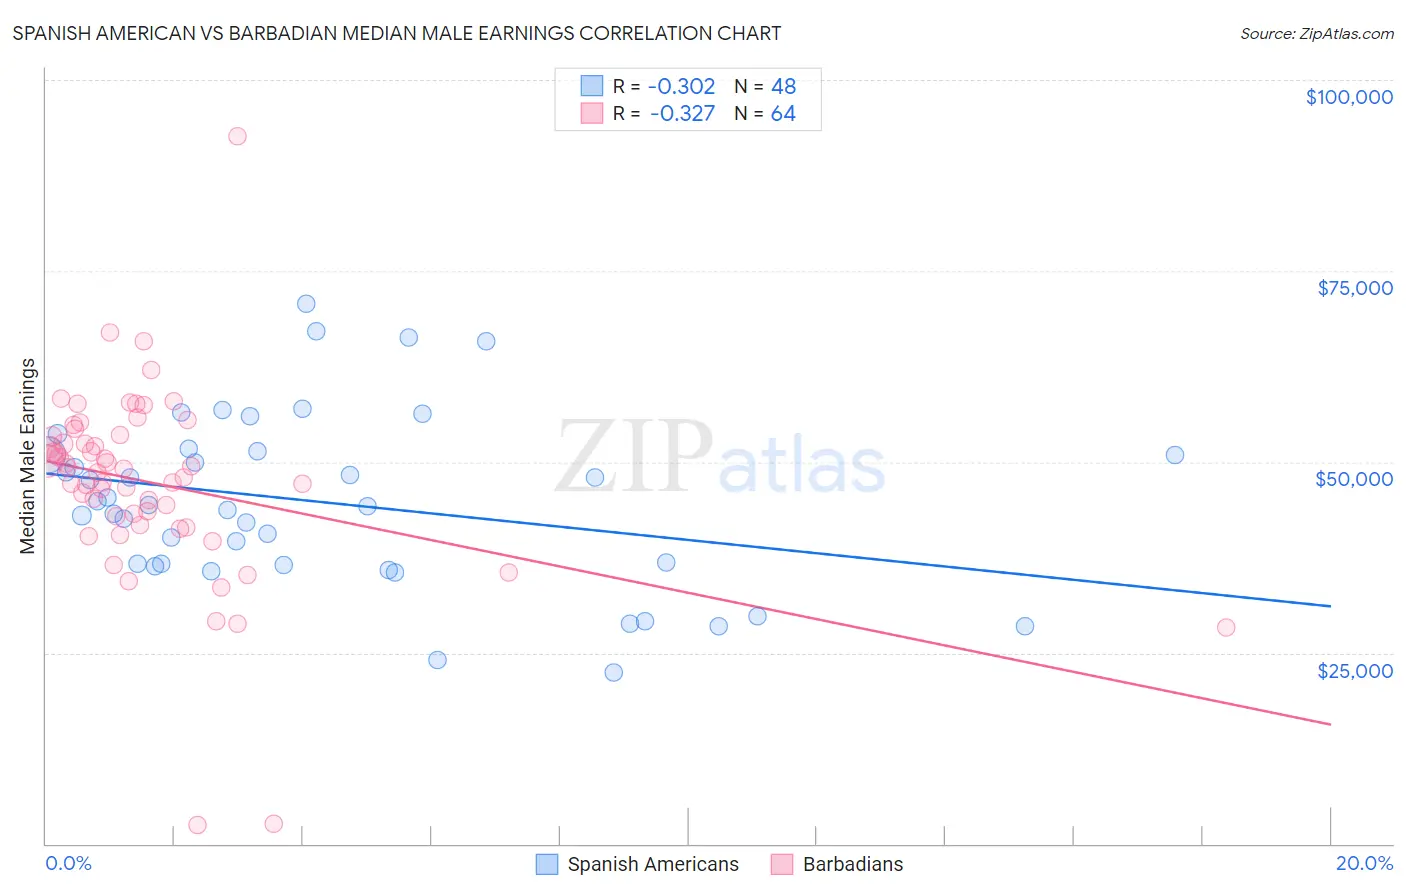 Spanish American vs Barbadian Median Male Earnings